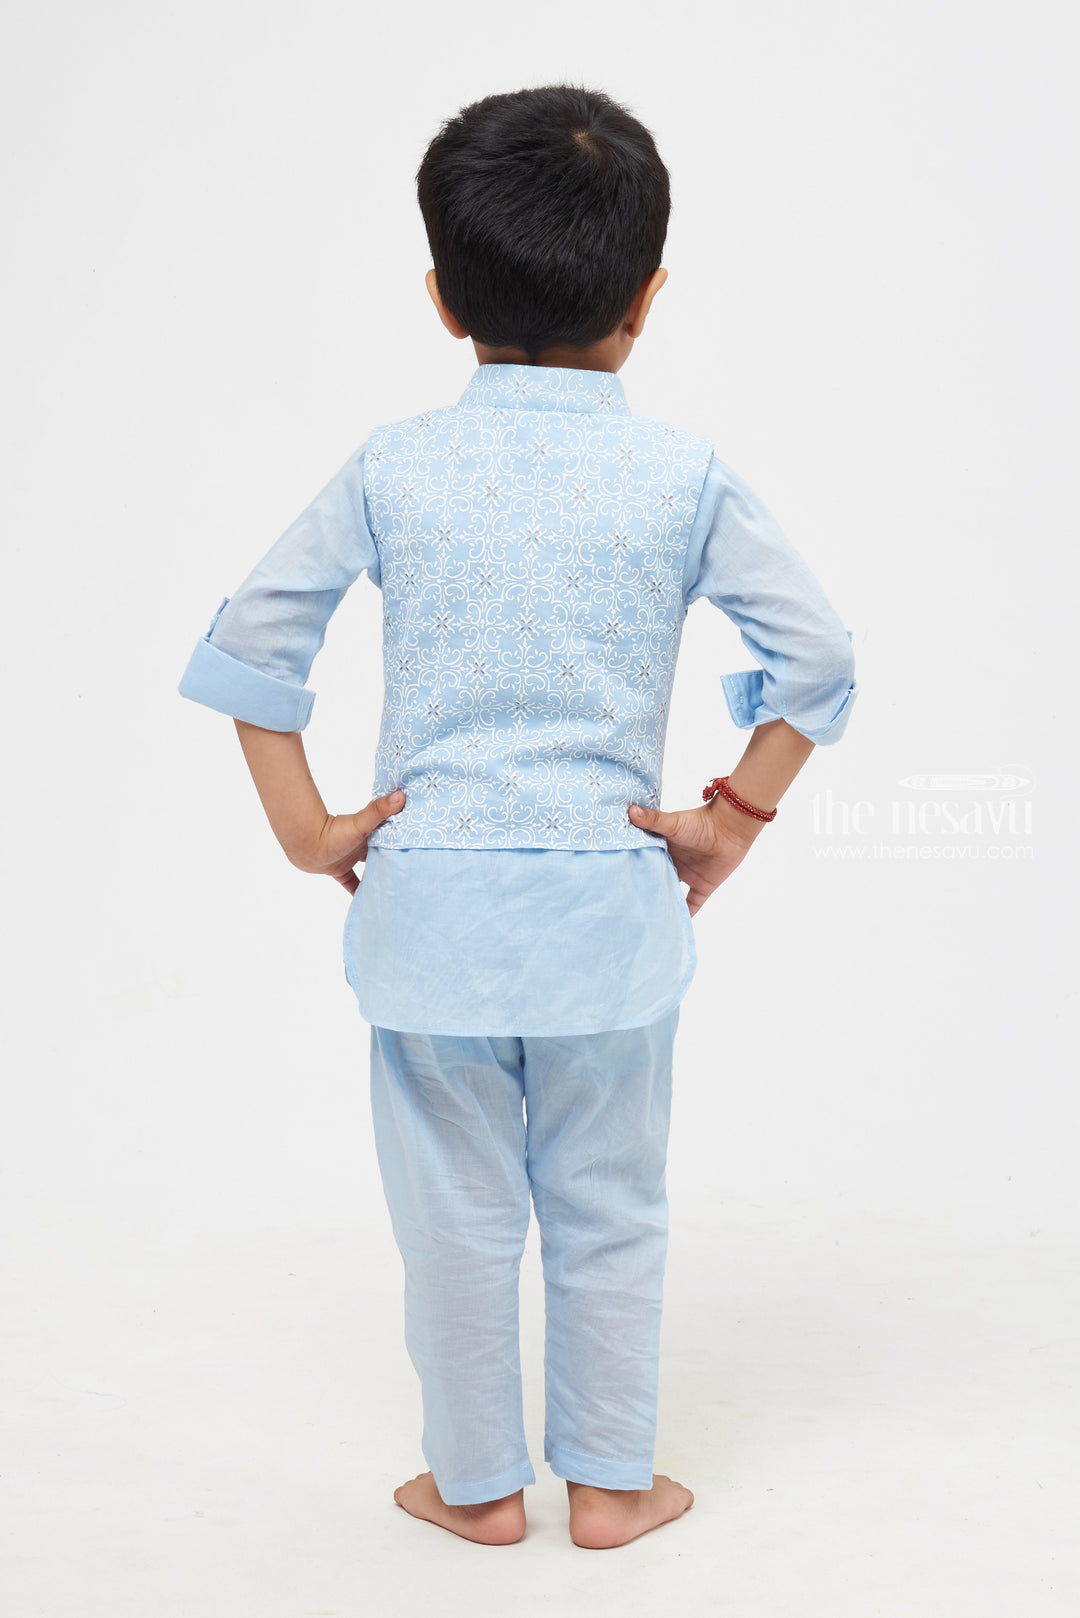 The Nesavu Boys Jacket Sets Blue Brilliance: Chic Tile Print Overcoat & Blue Kurta with Coordinated Pant for Boys. Nesavu Boys Wedding Kurta Pyjama | Elegant Festive Wear | The Nesavu